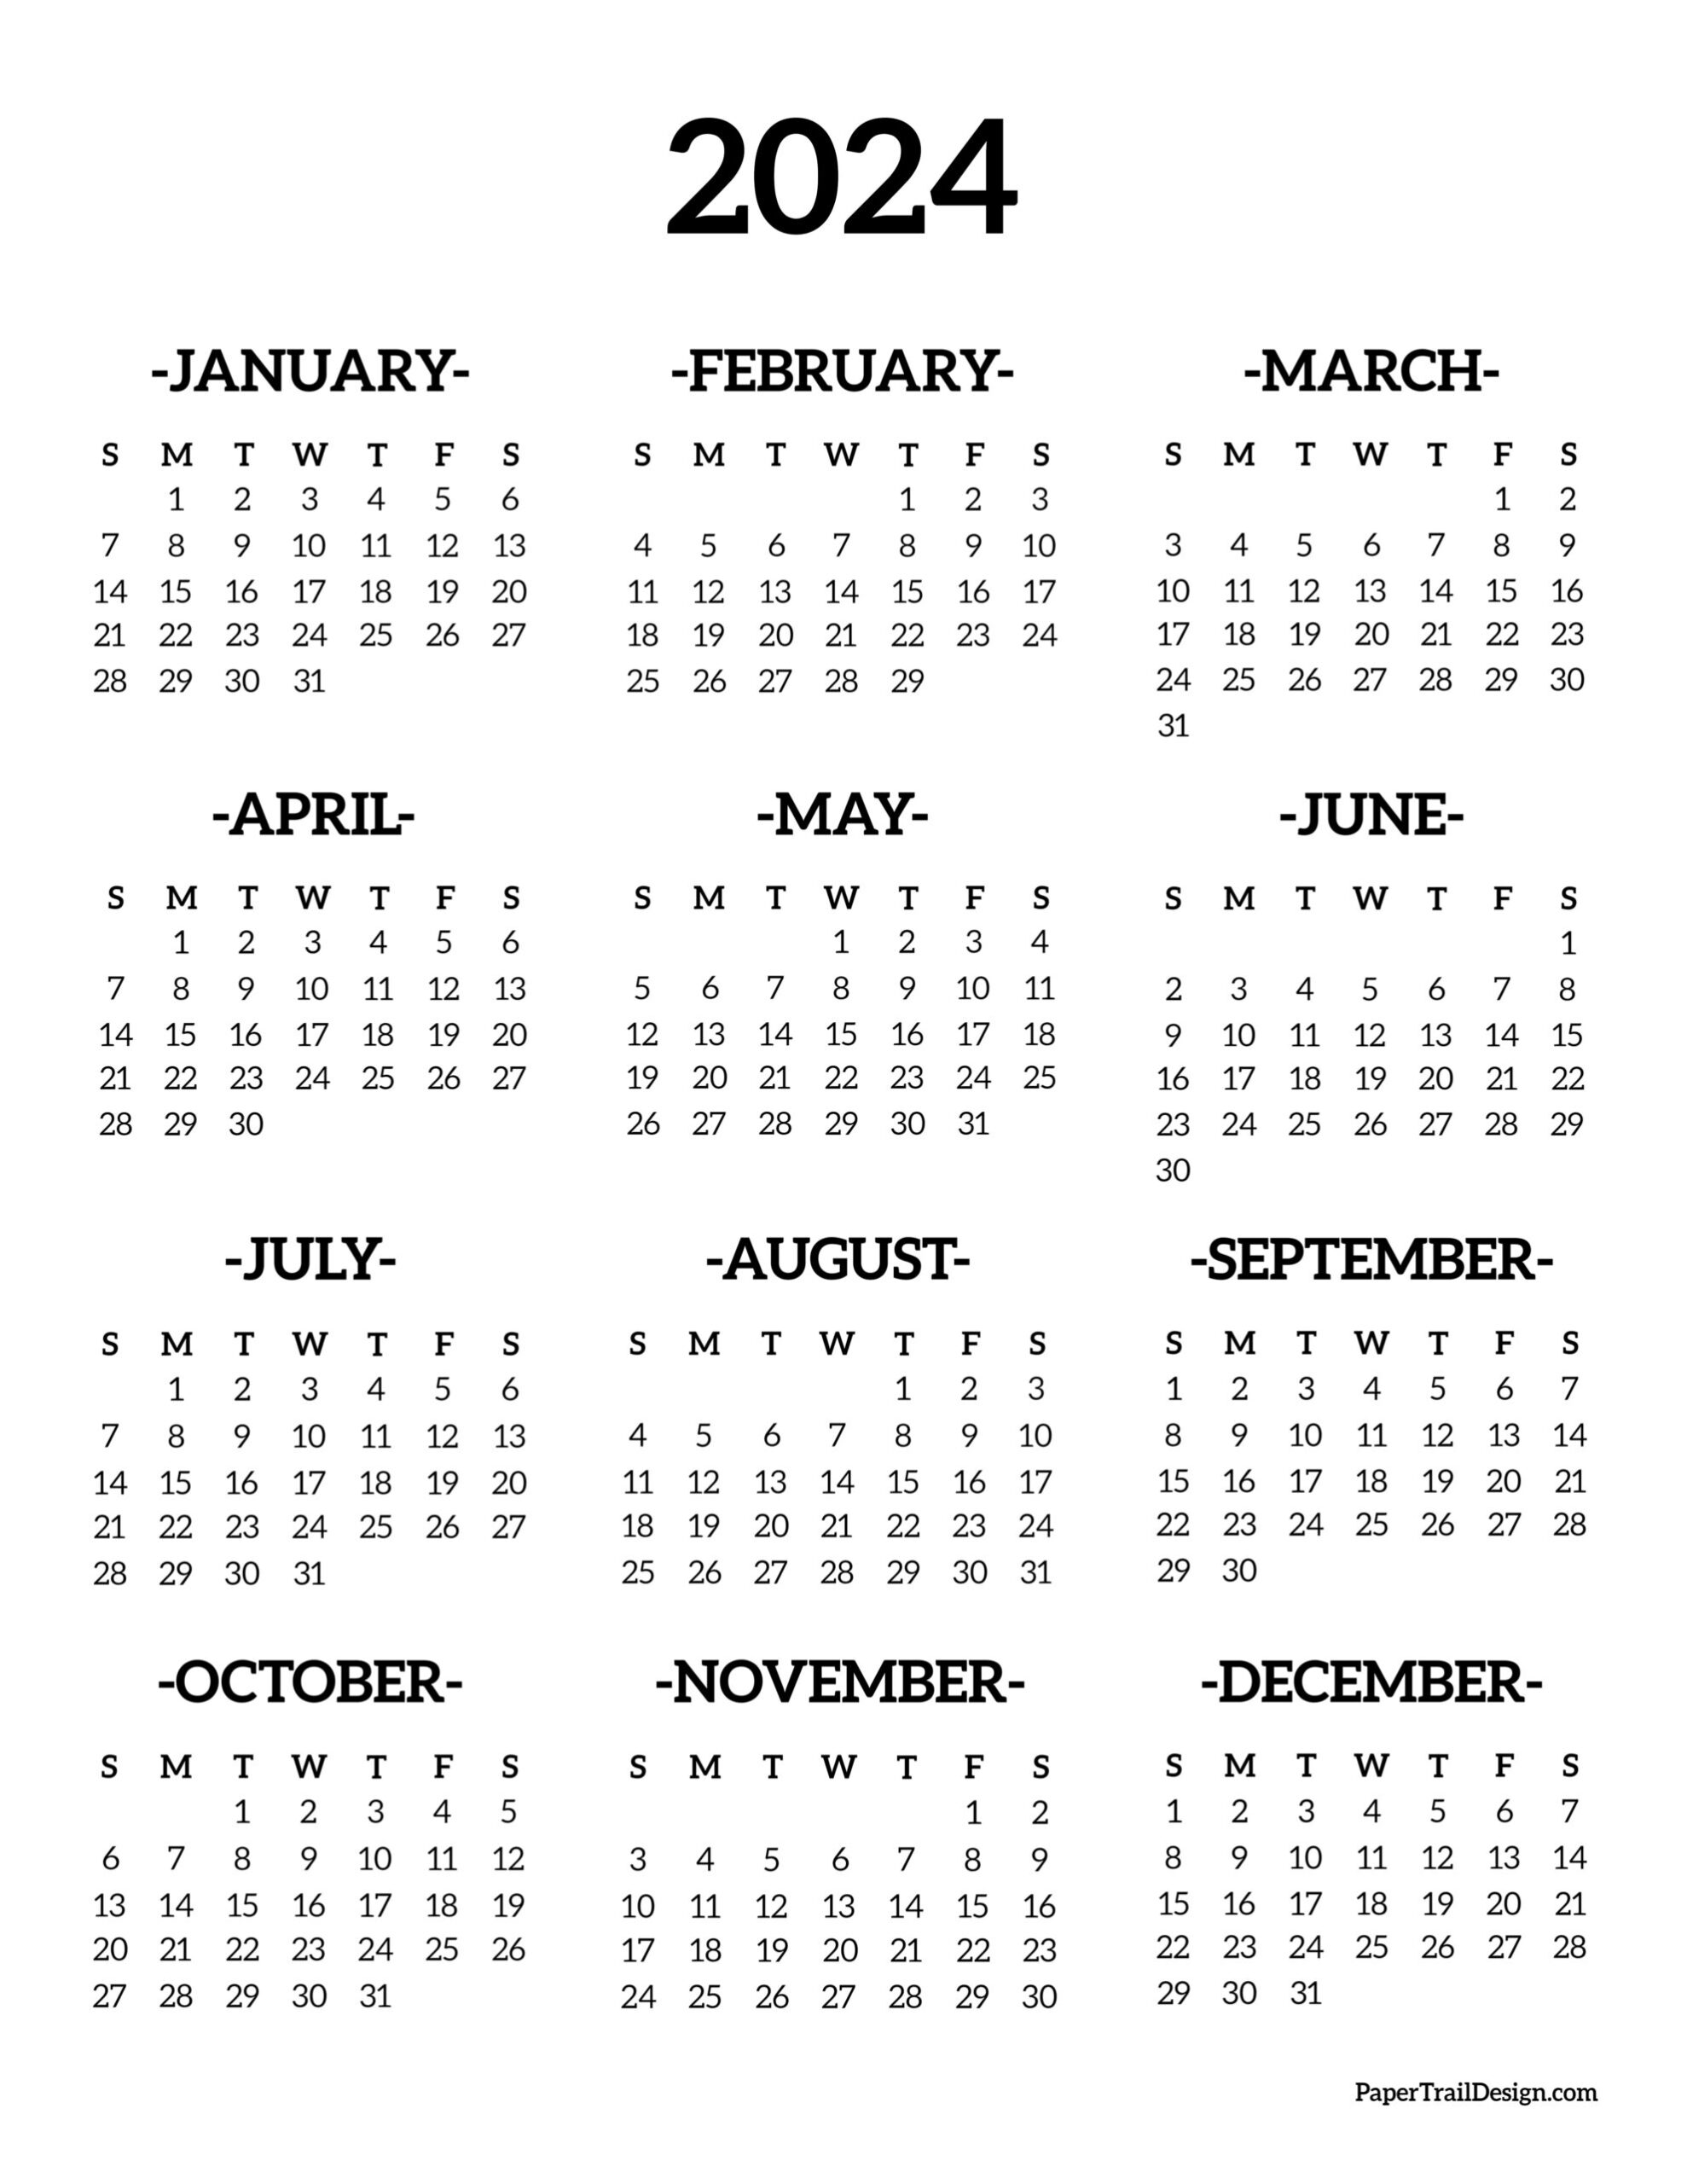 Calendar 2024 Printable One Page - Paper Trail Design for Calendar Free Printable 2024